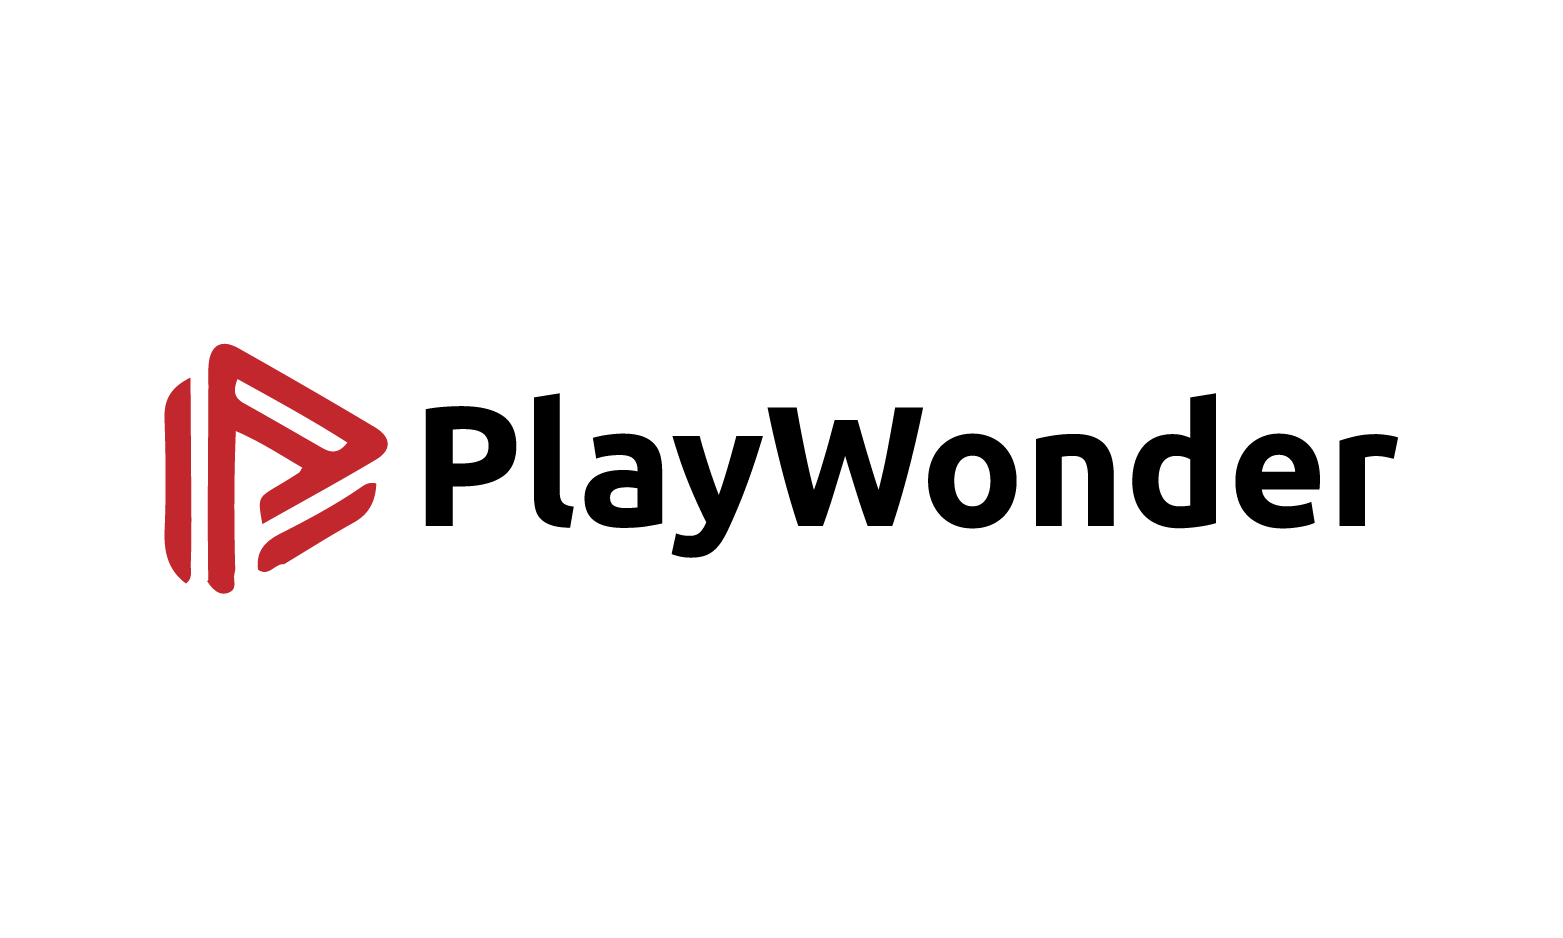 PlayWonder.com - Creative brandable domain for sale